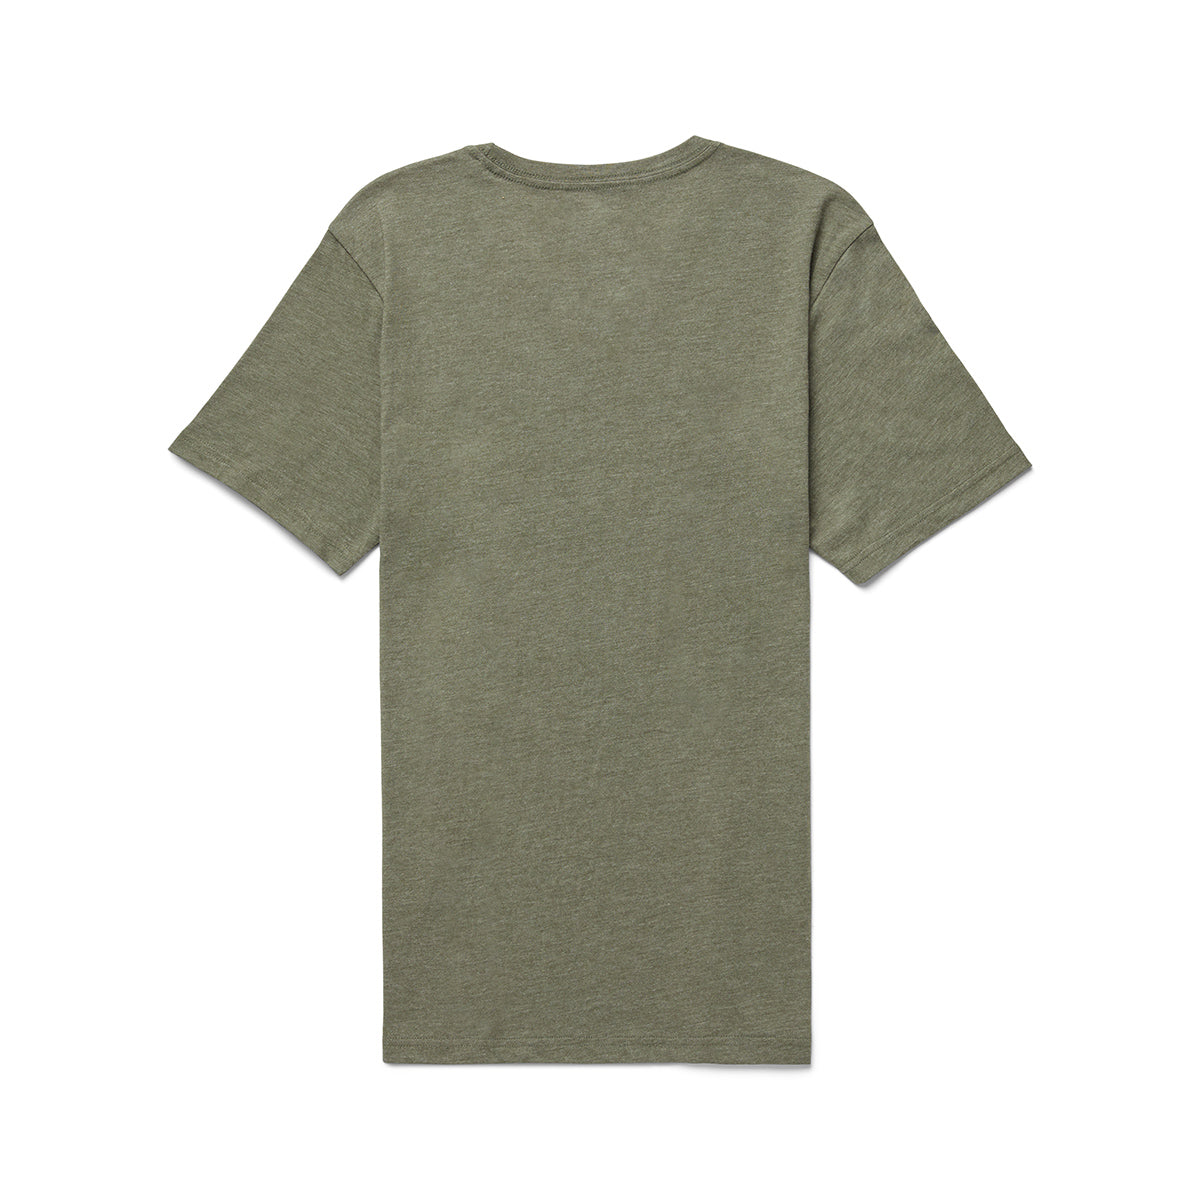 Cotopaxi Do Good T-Shirt - MENS コトパクシ ドゥグッドTシャツ メンズ